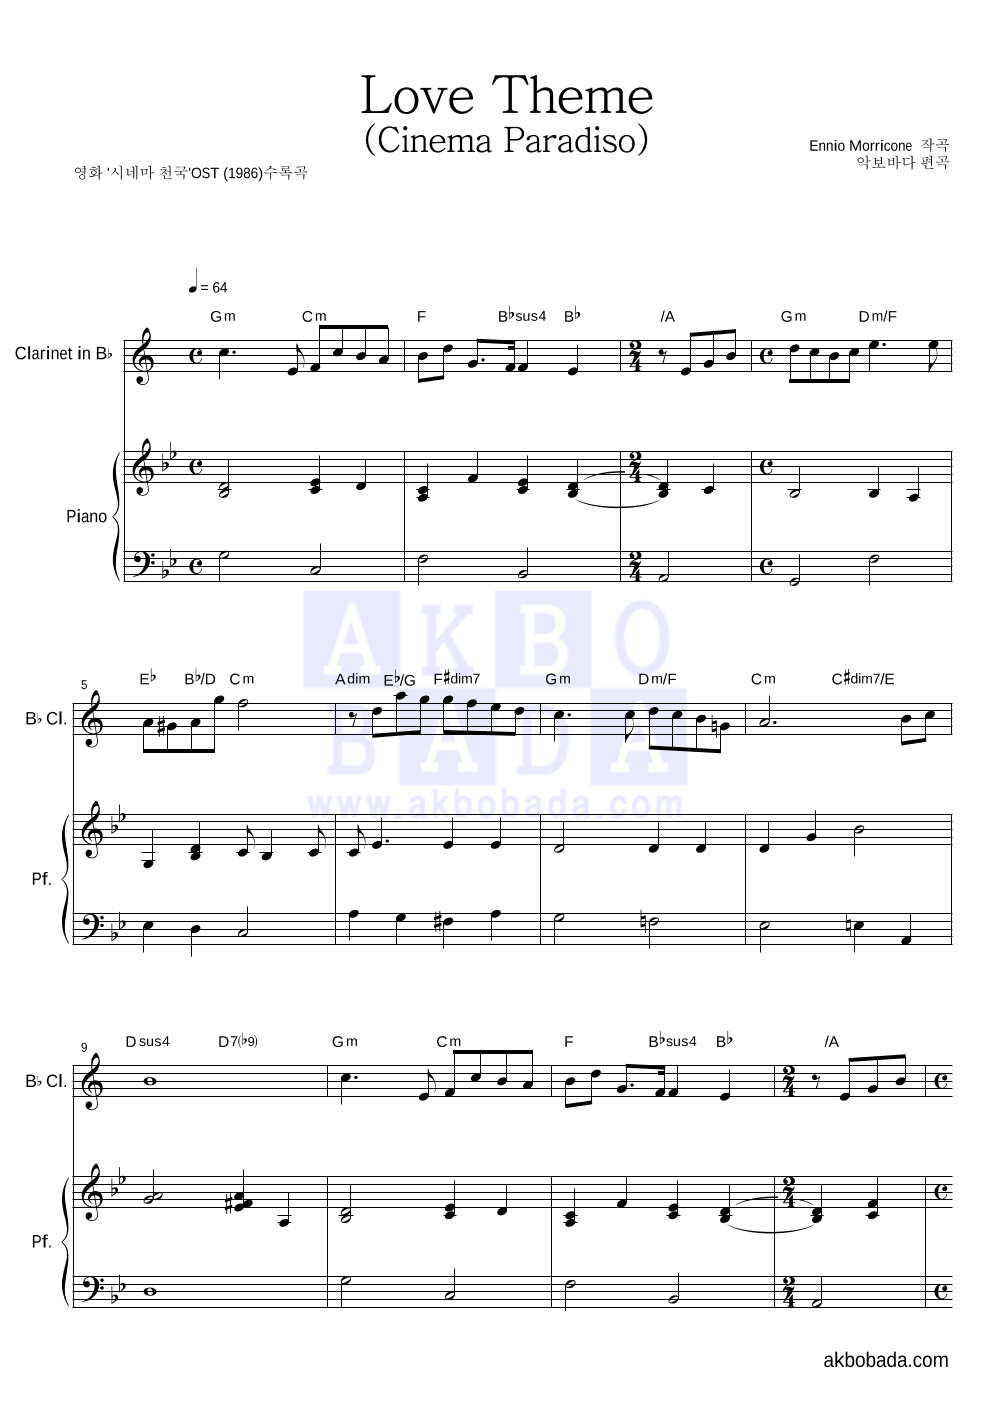 Ennio Morricone - Love Theme (Cinema Paradiso) 클라리넷&피아노 악보 